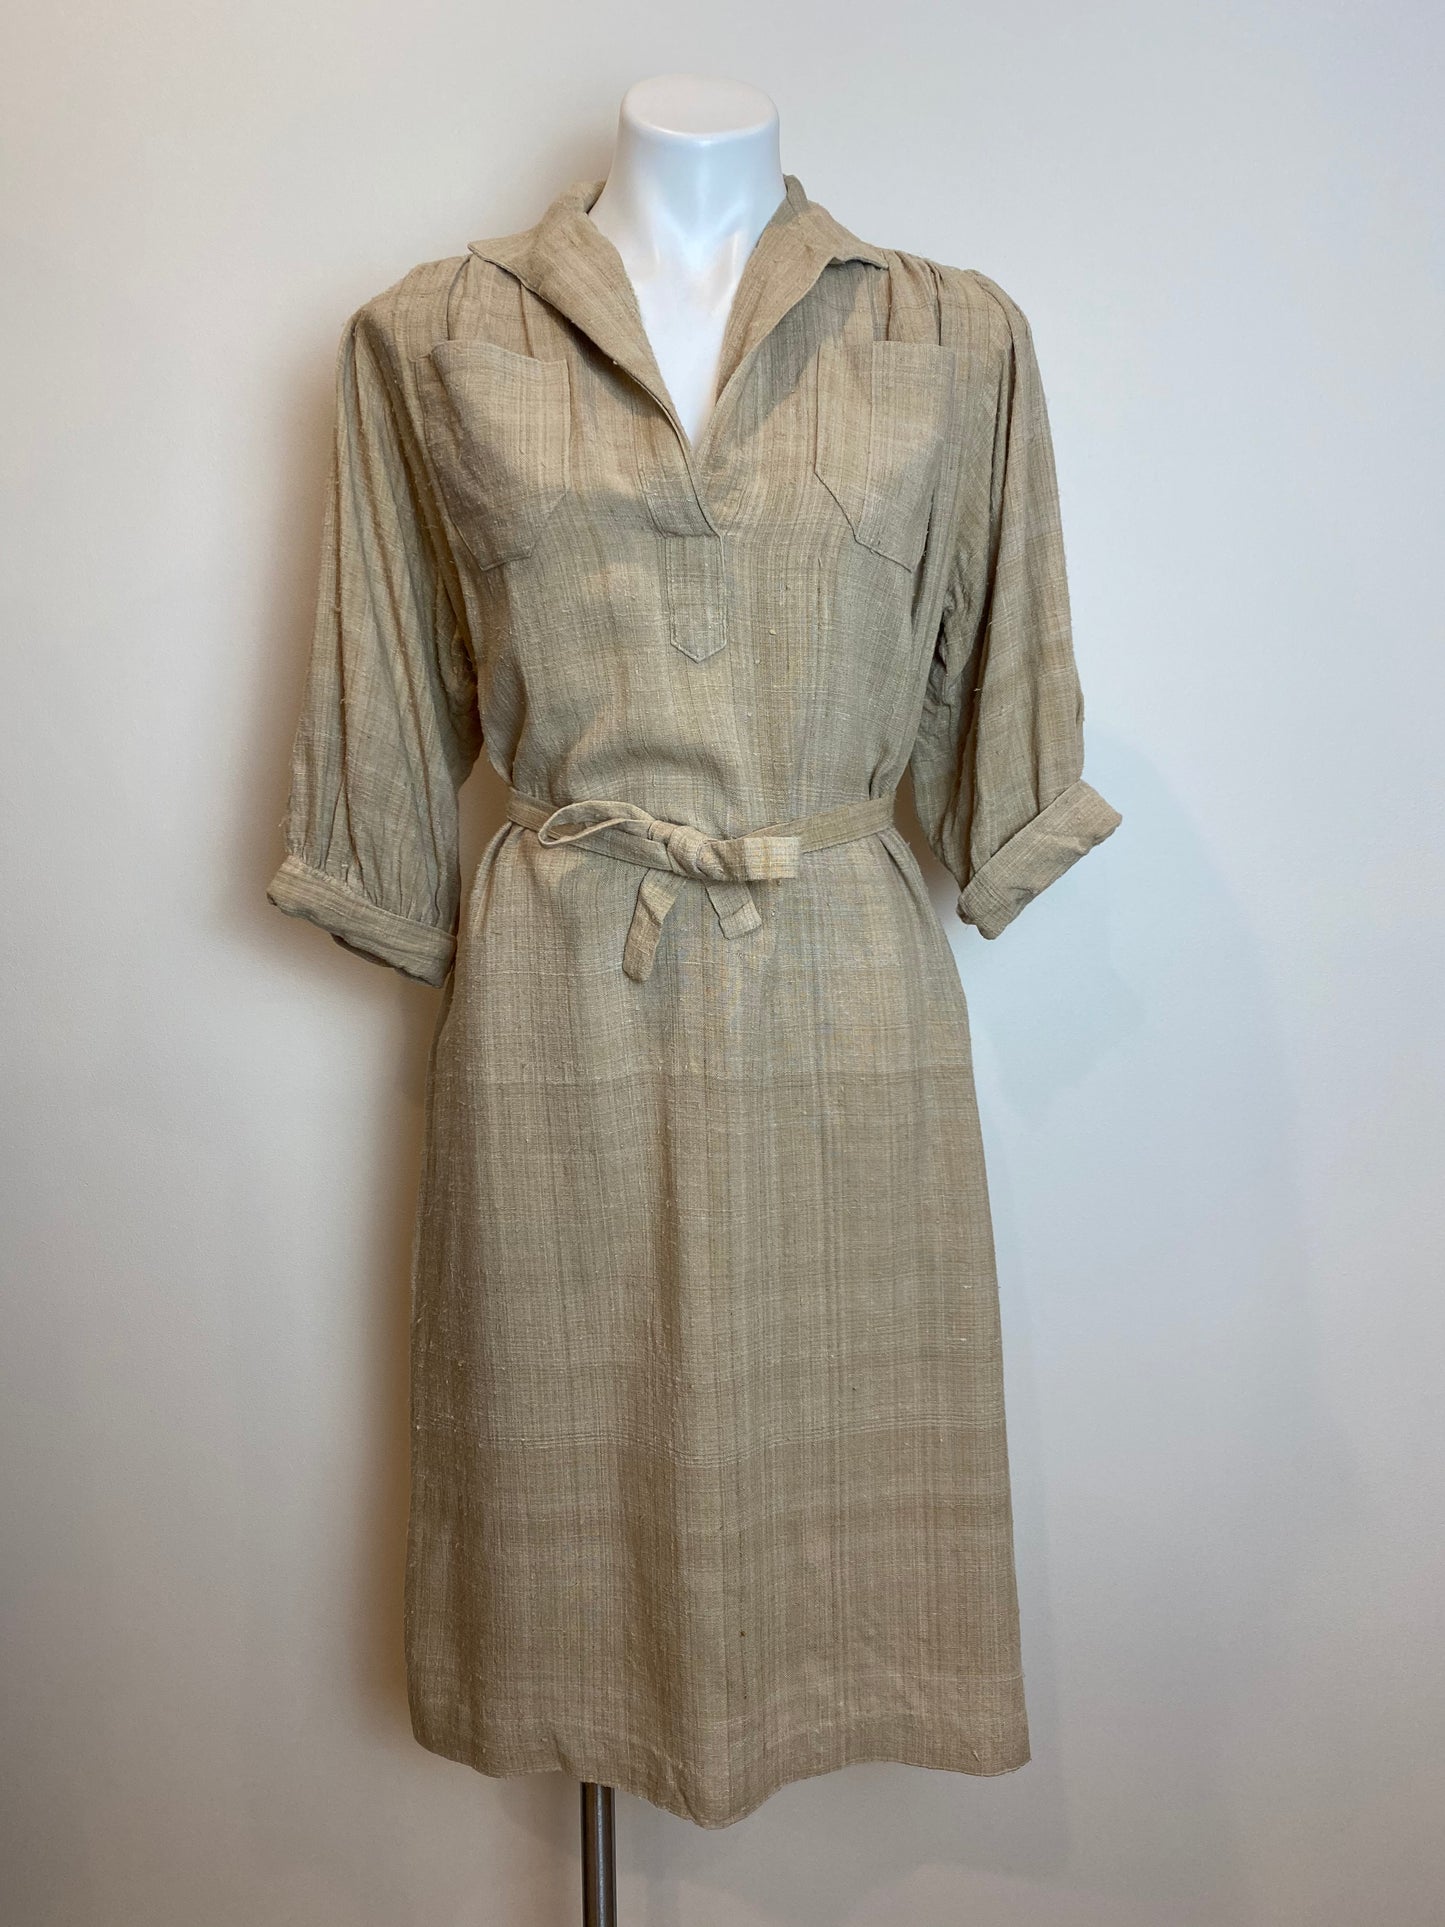 The Ava Dress, 1970's